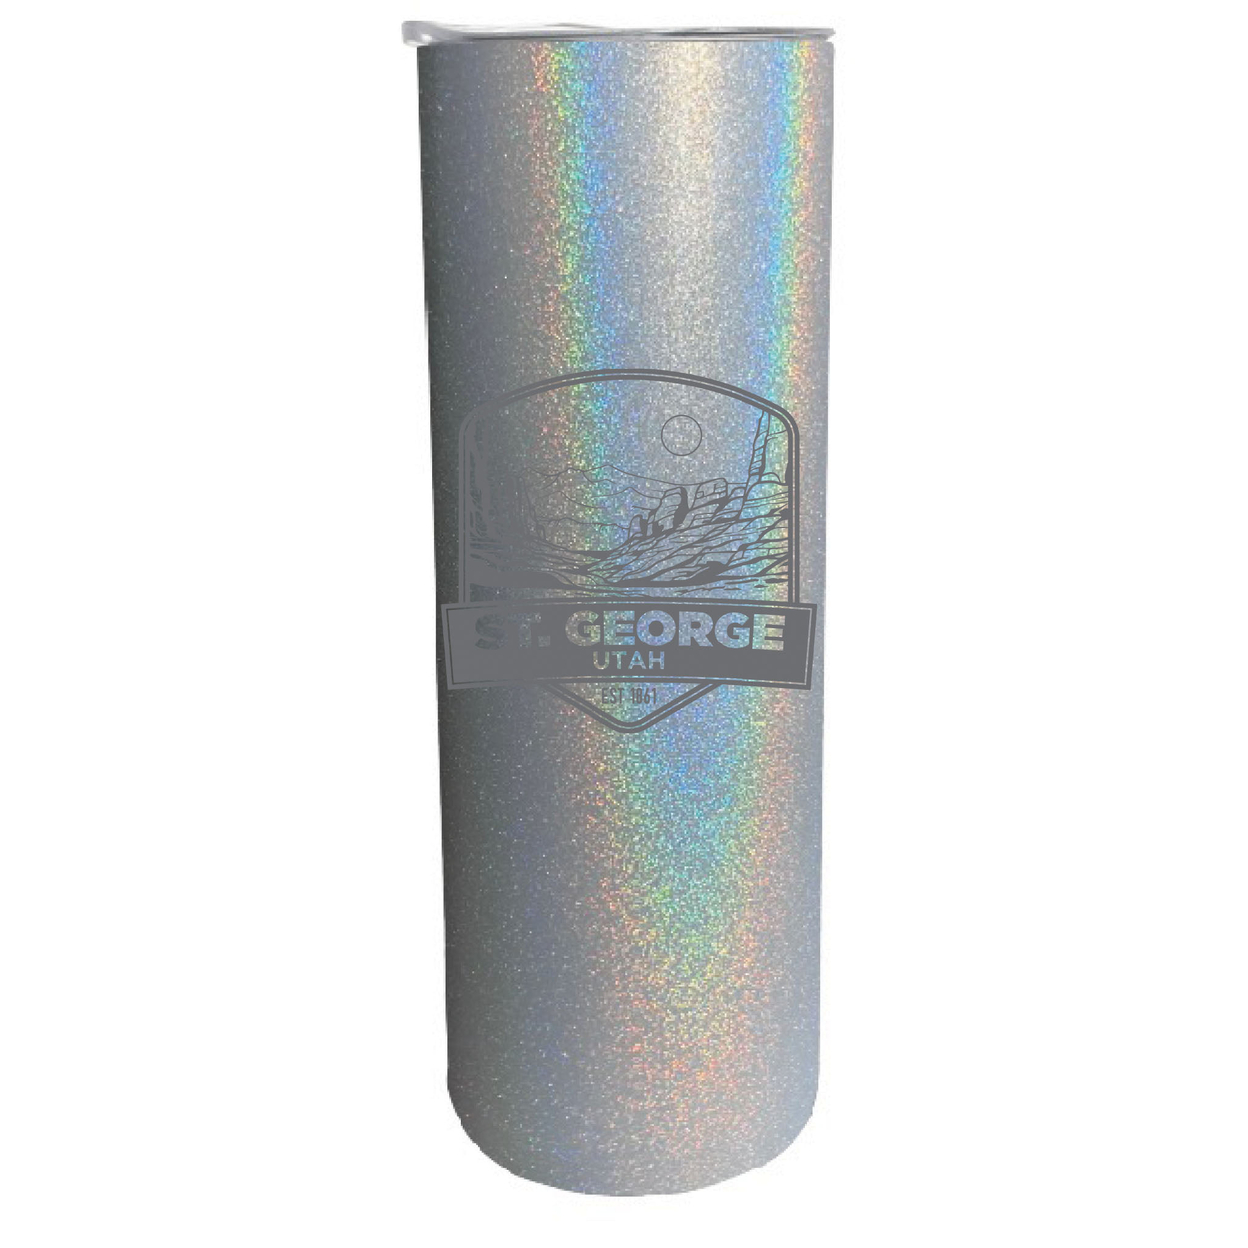 St. George Utah Souvenir 20 Oz Engraved Insulated Stainless Steel Skinny Tumbler - Gray Glitter,,Single Unit